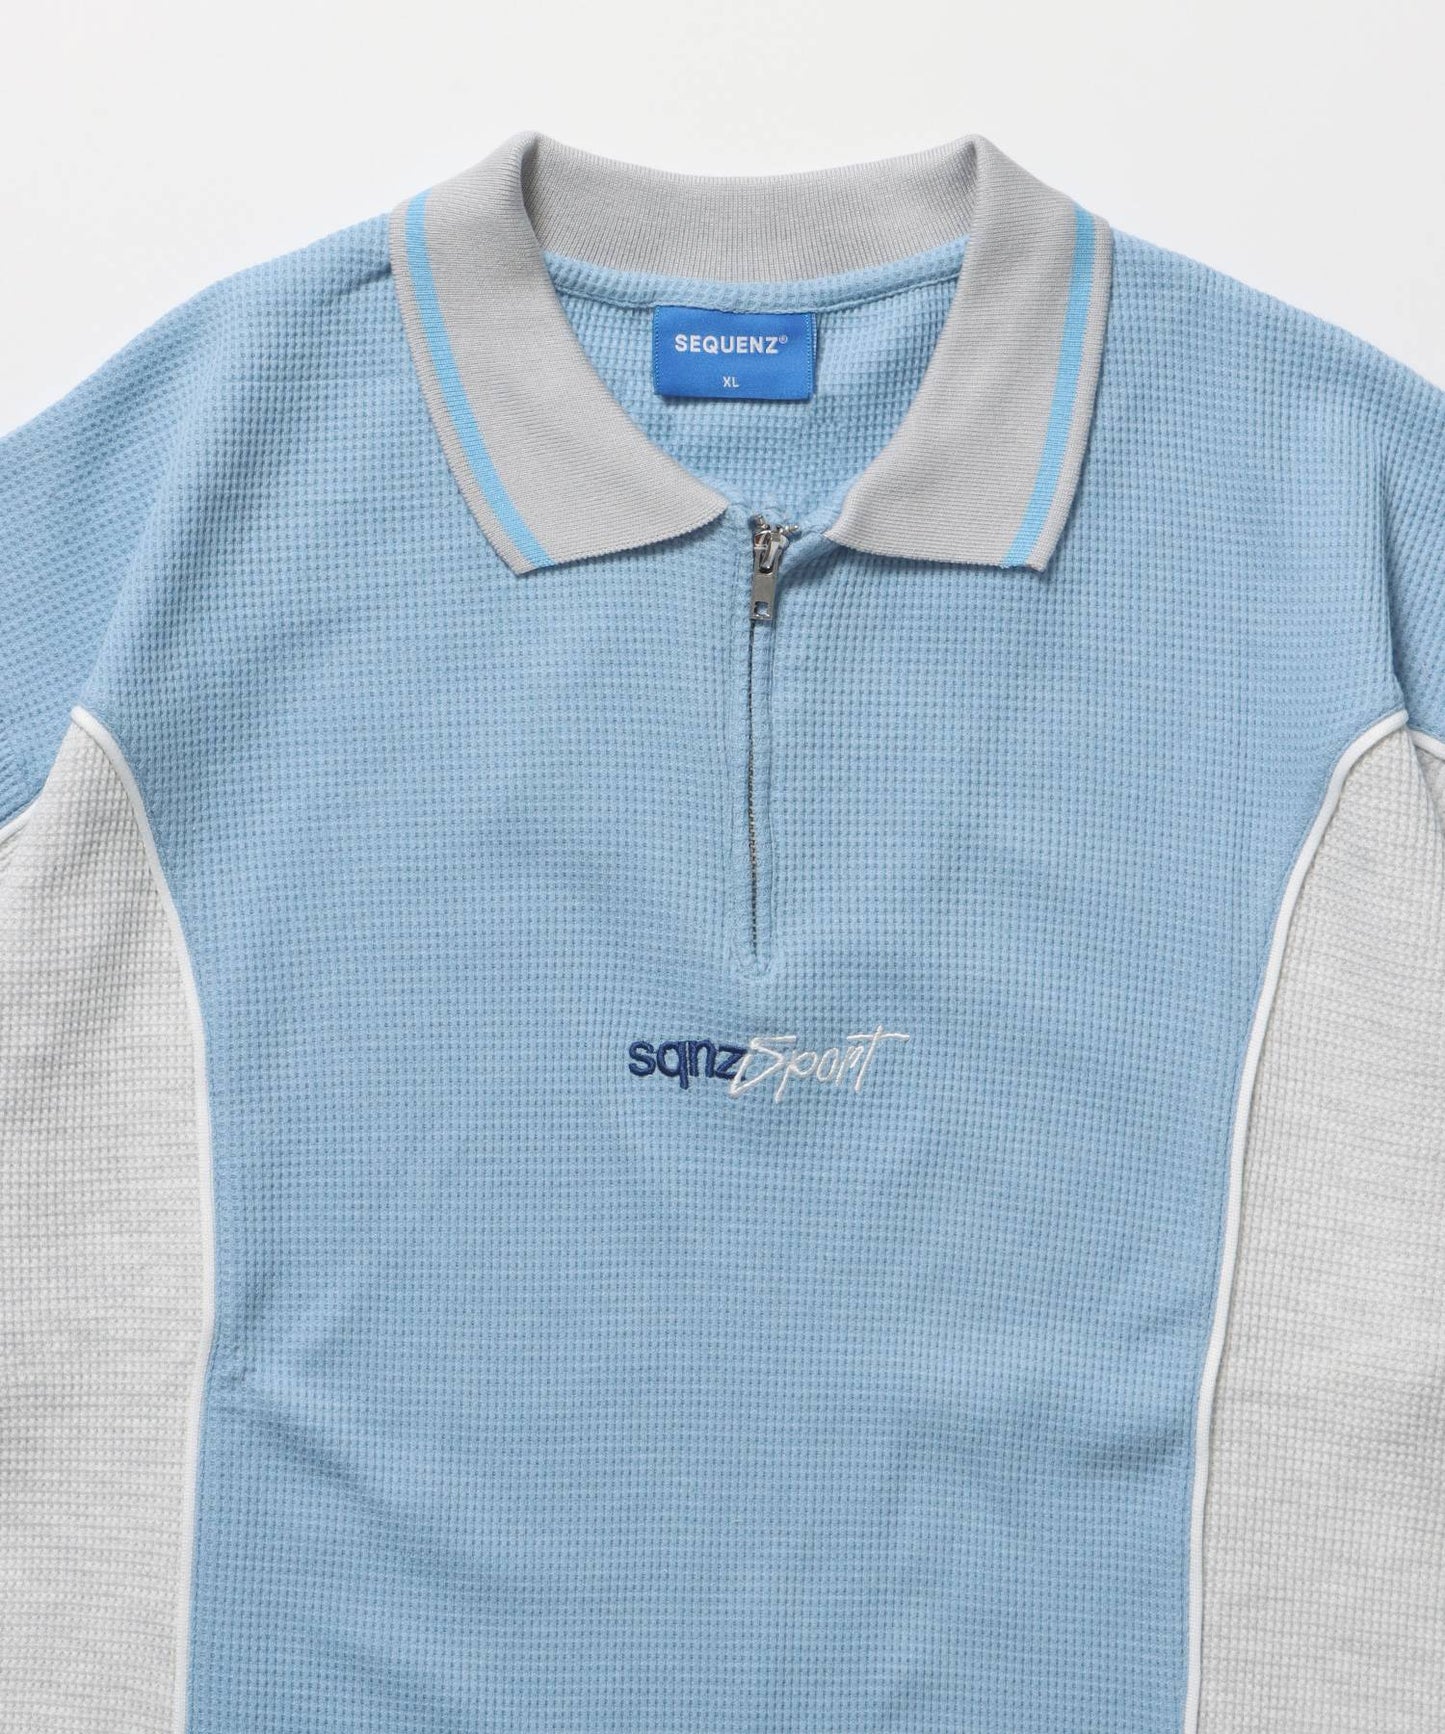 SQNZ SPORT ZIP POLO S/S THERMAL / 衿付き ポロシャツ 配色 パイピング ブランドロゴ ワンポイント ハーフジップ ブルー